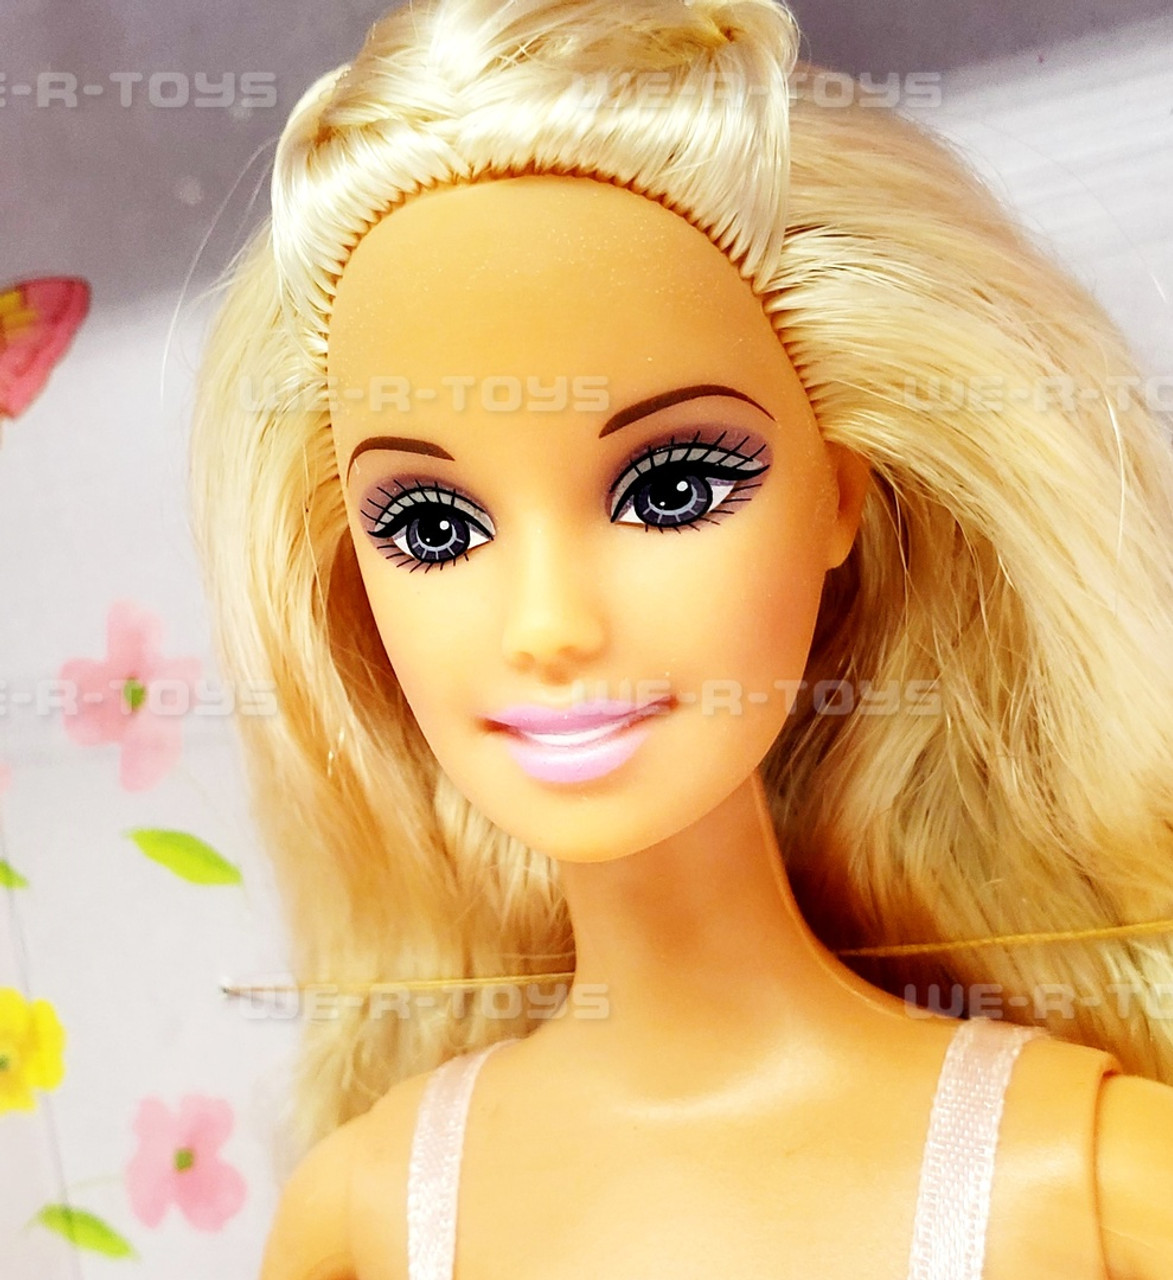 Barbie Flower Surprise Doll 2002 Mattel No. B2820 NEW - We-R-Toys